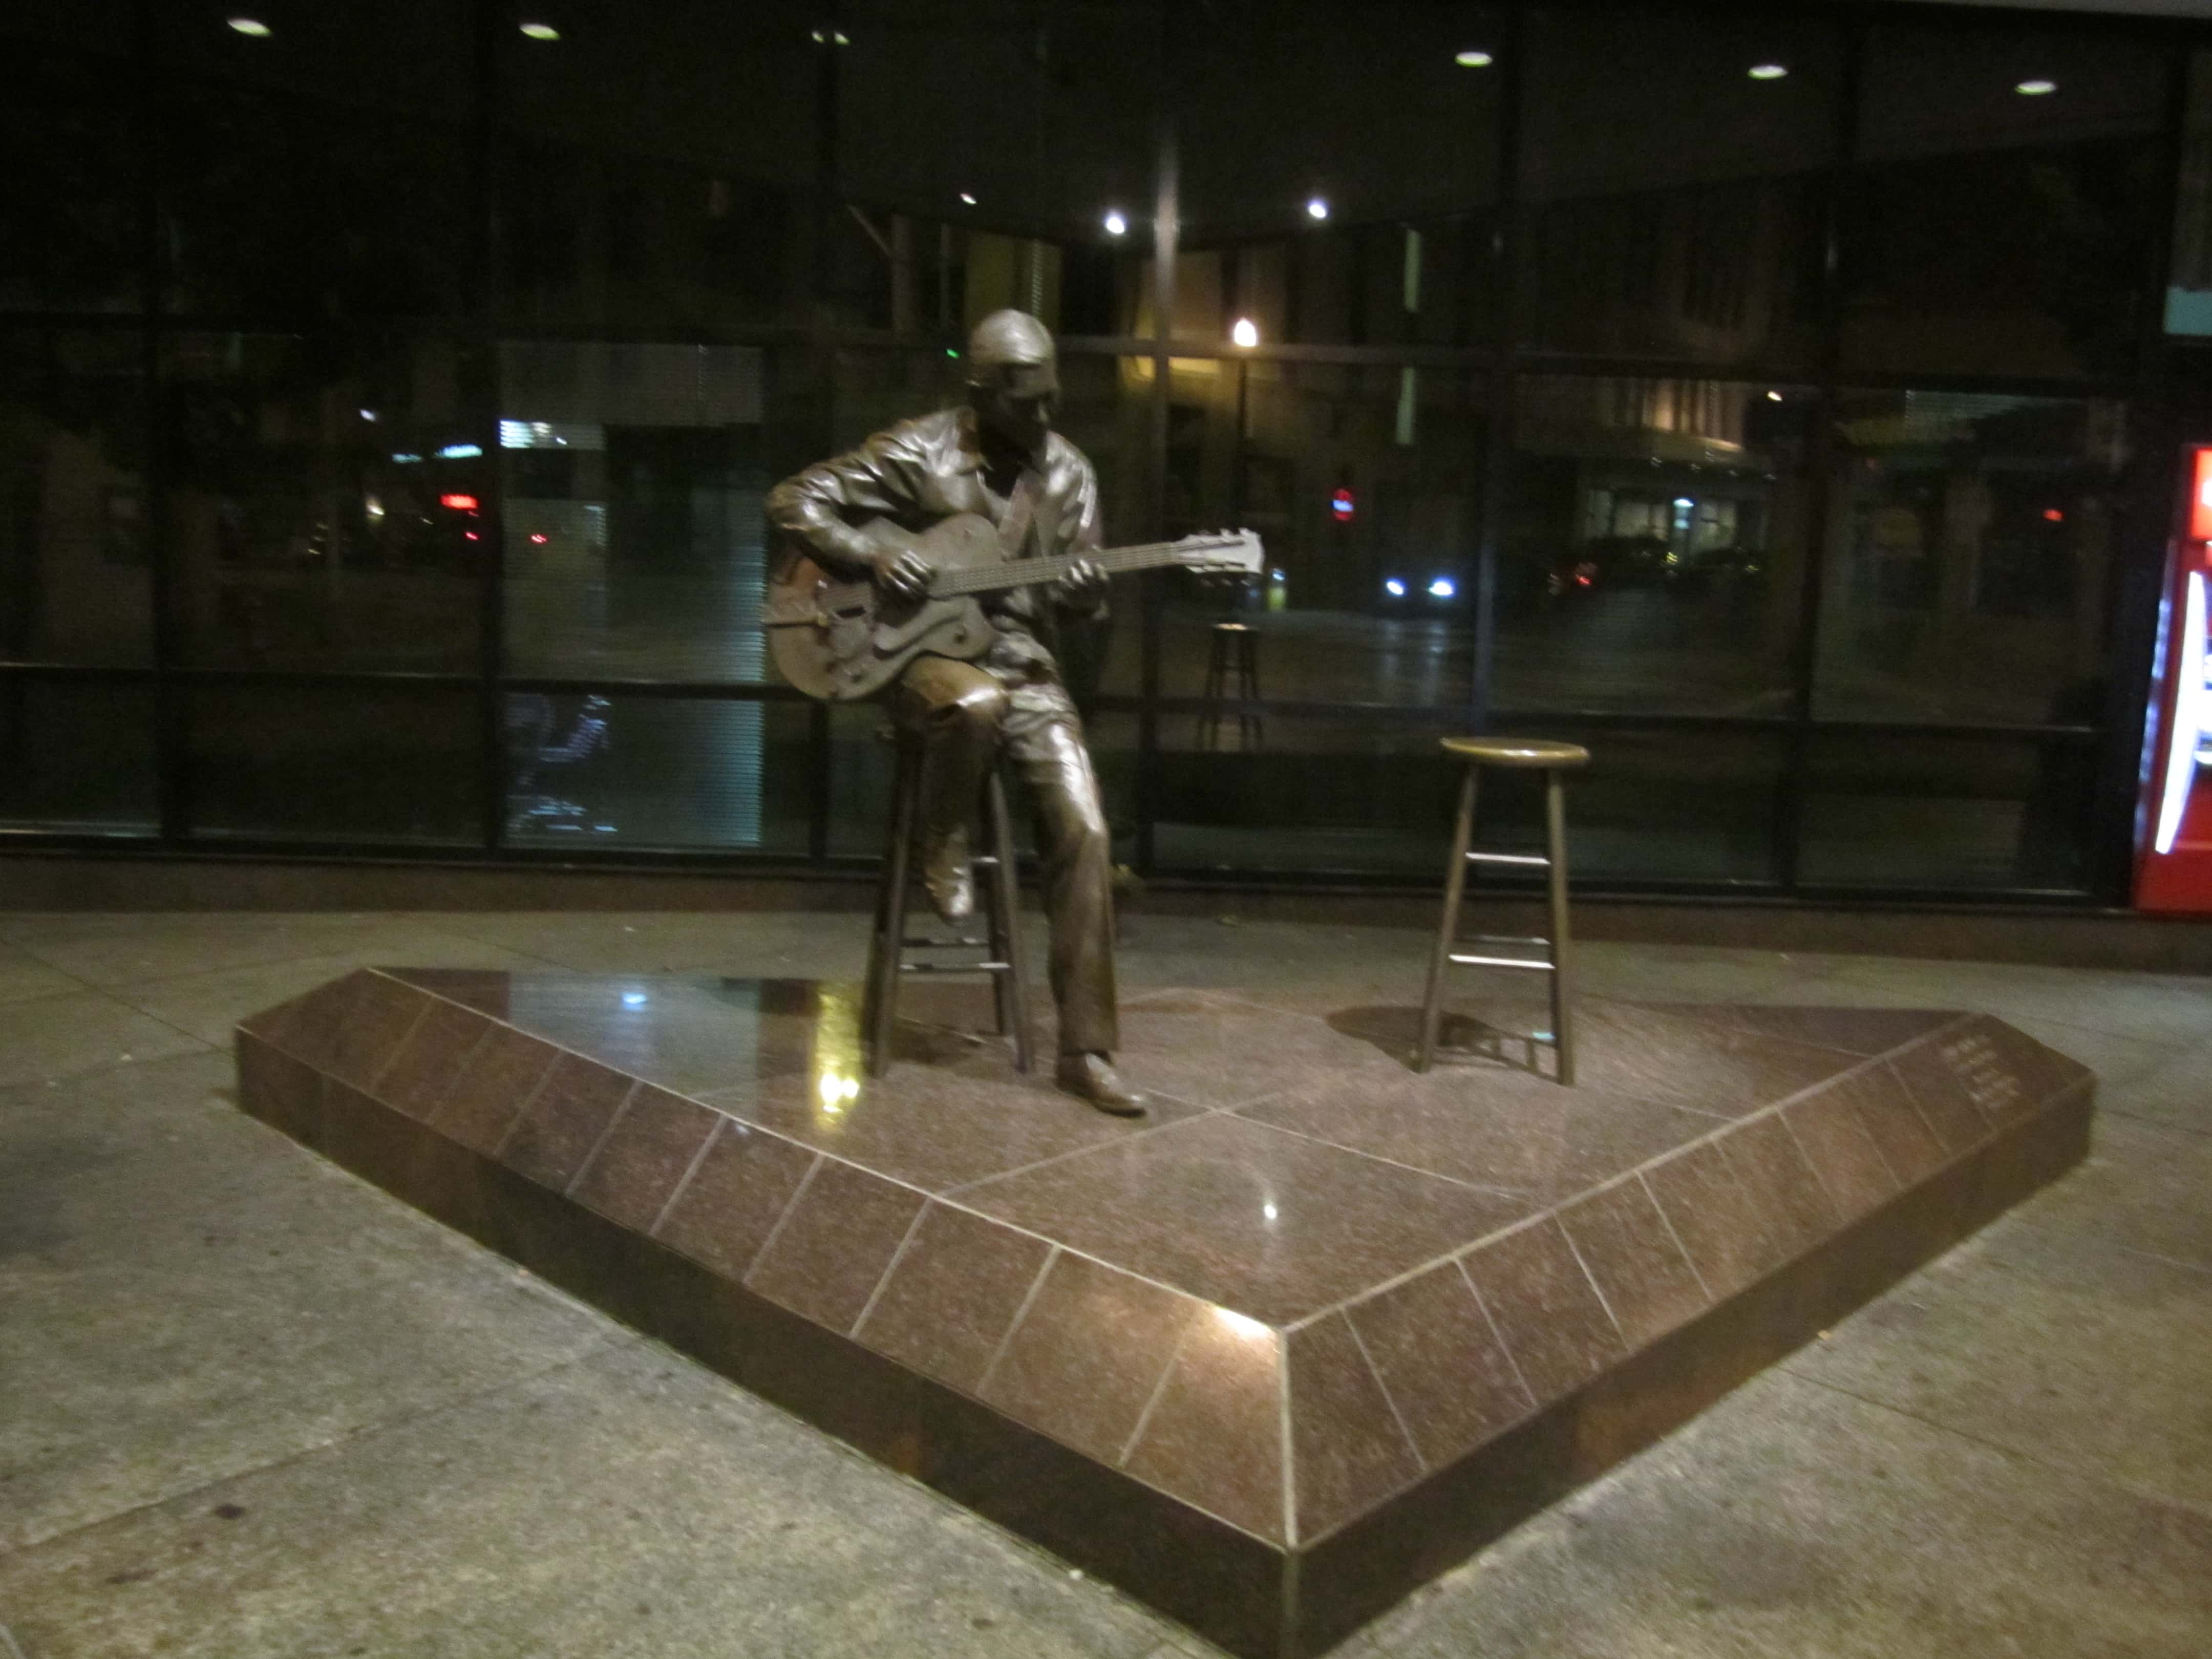 Guitar Player Statue - Nashville, Tennessee